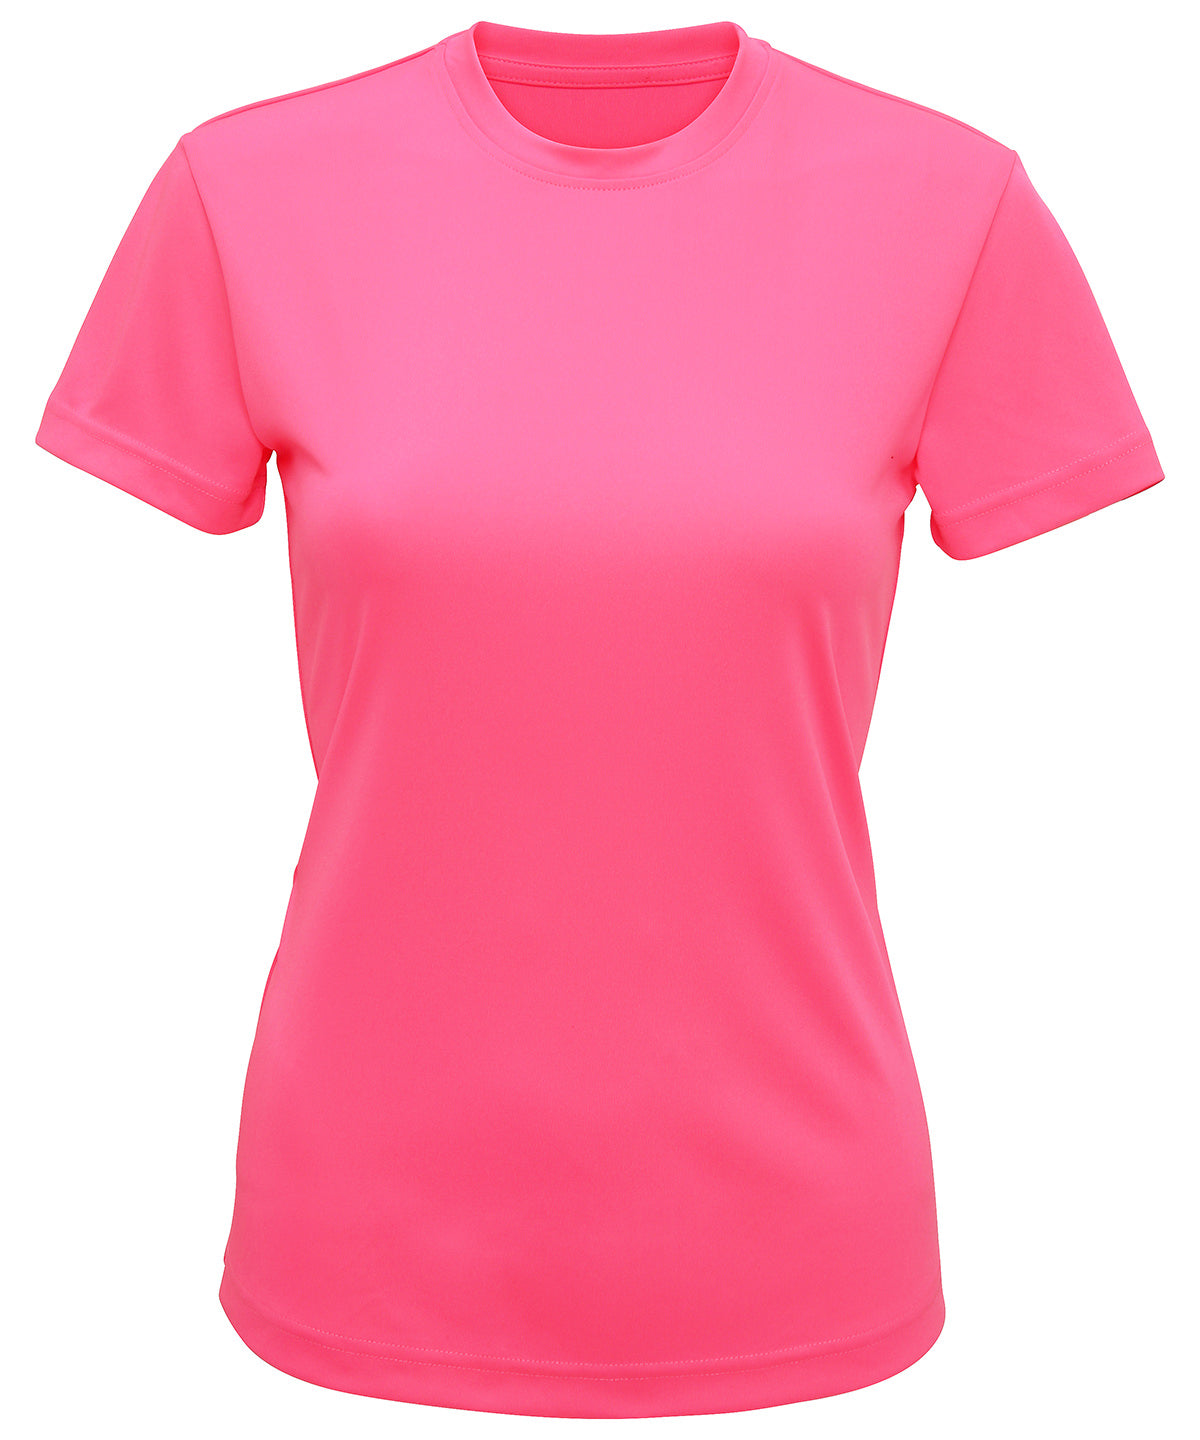 TriDri Womens Performance T-Shirt Lightning Pink